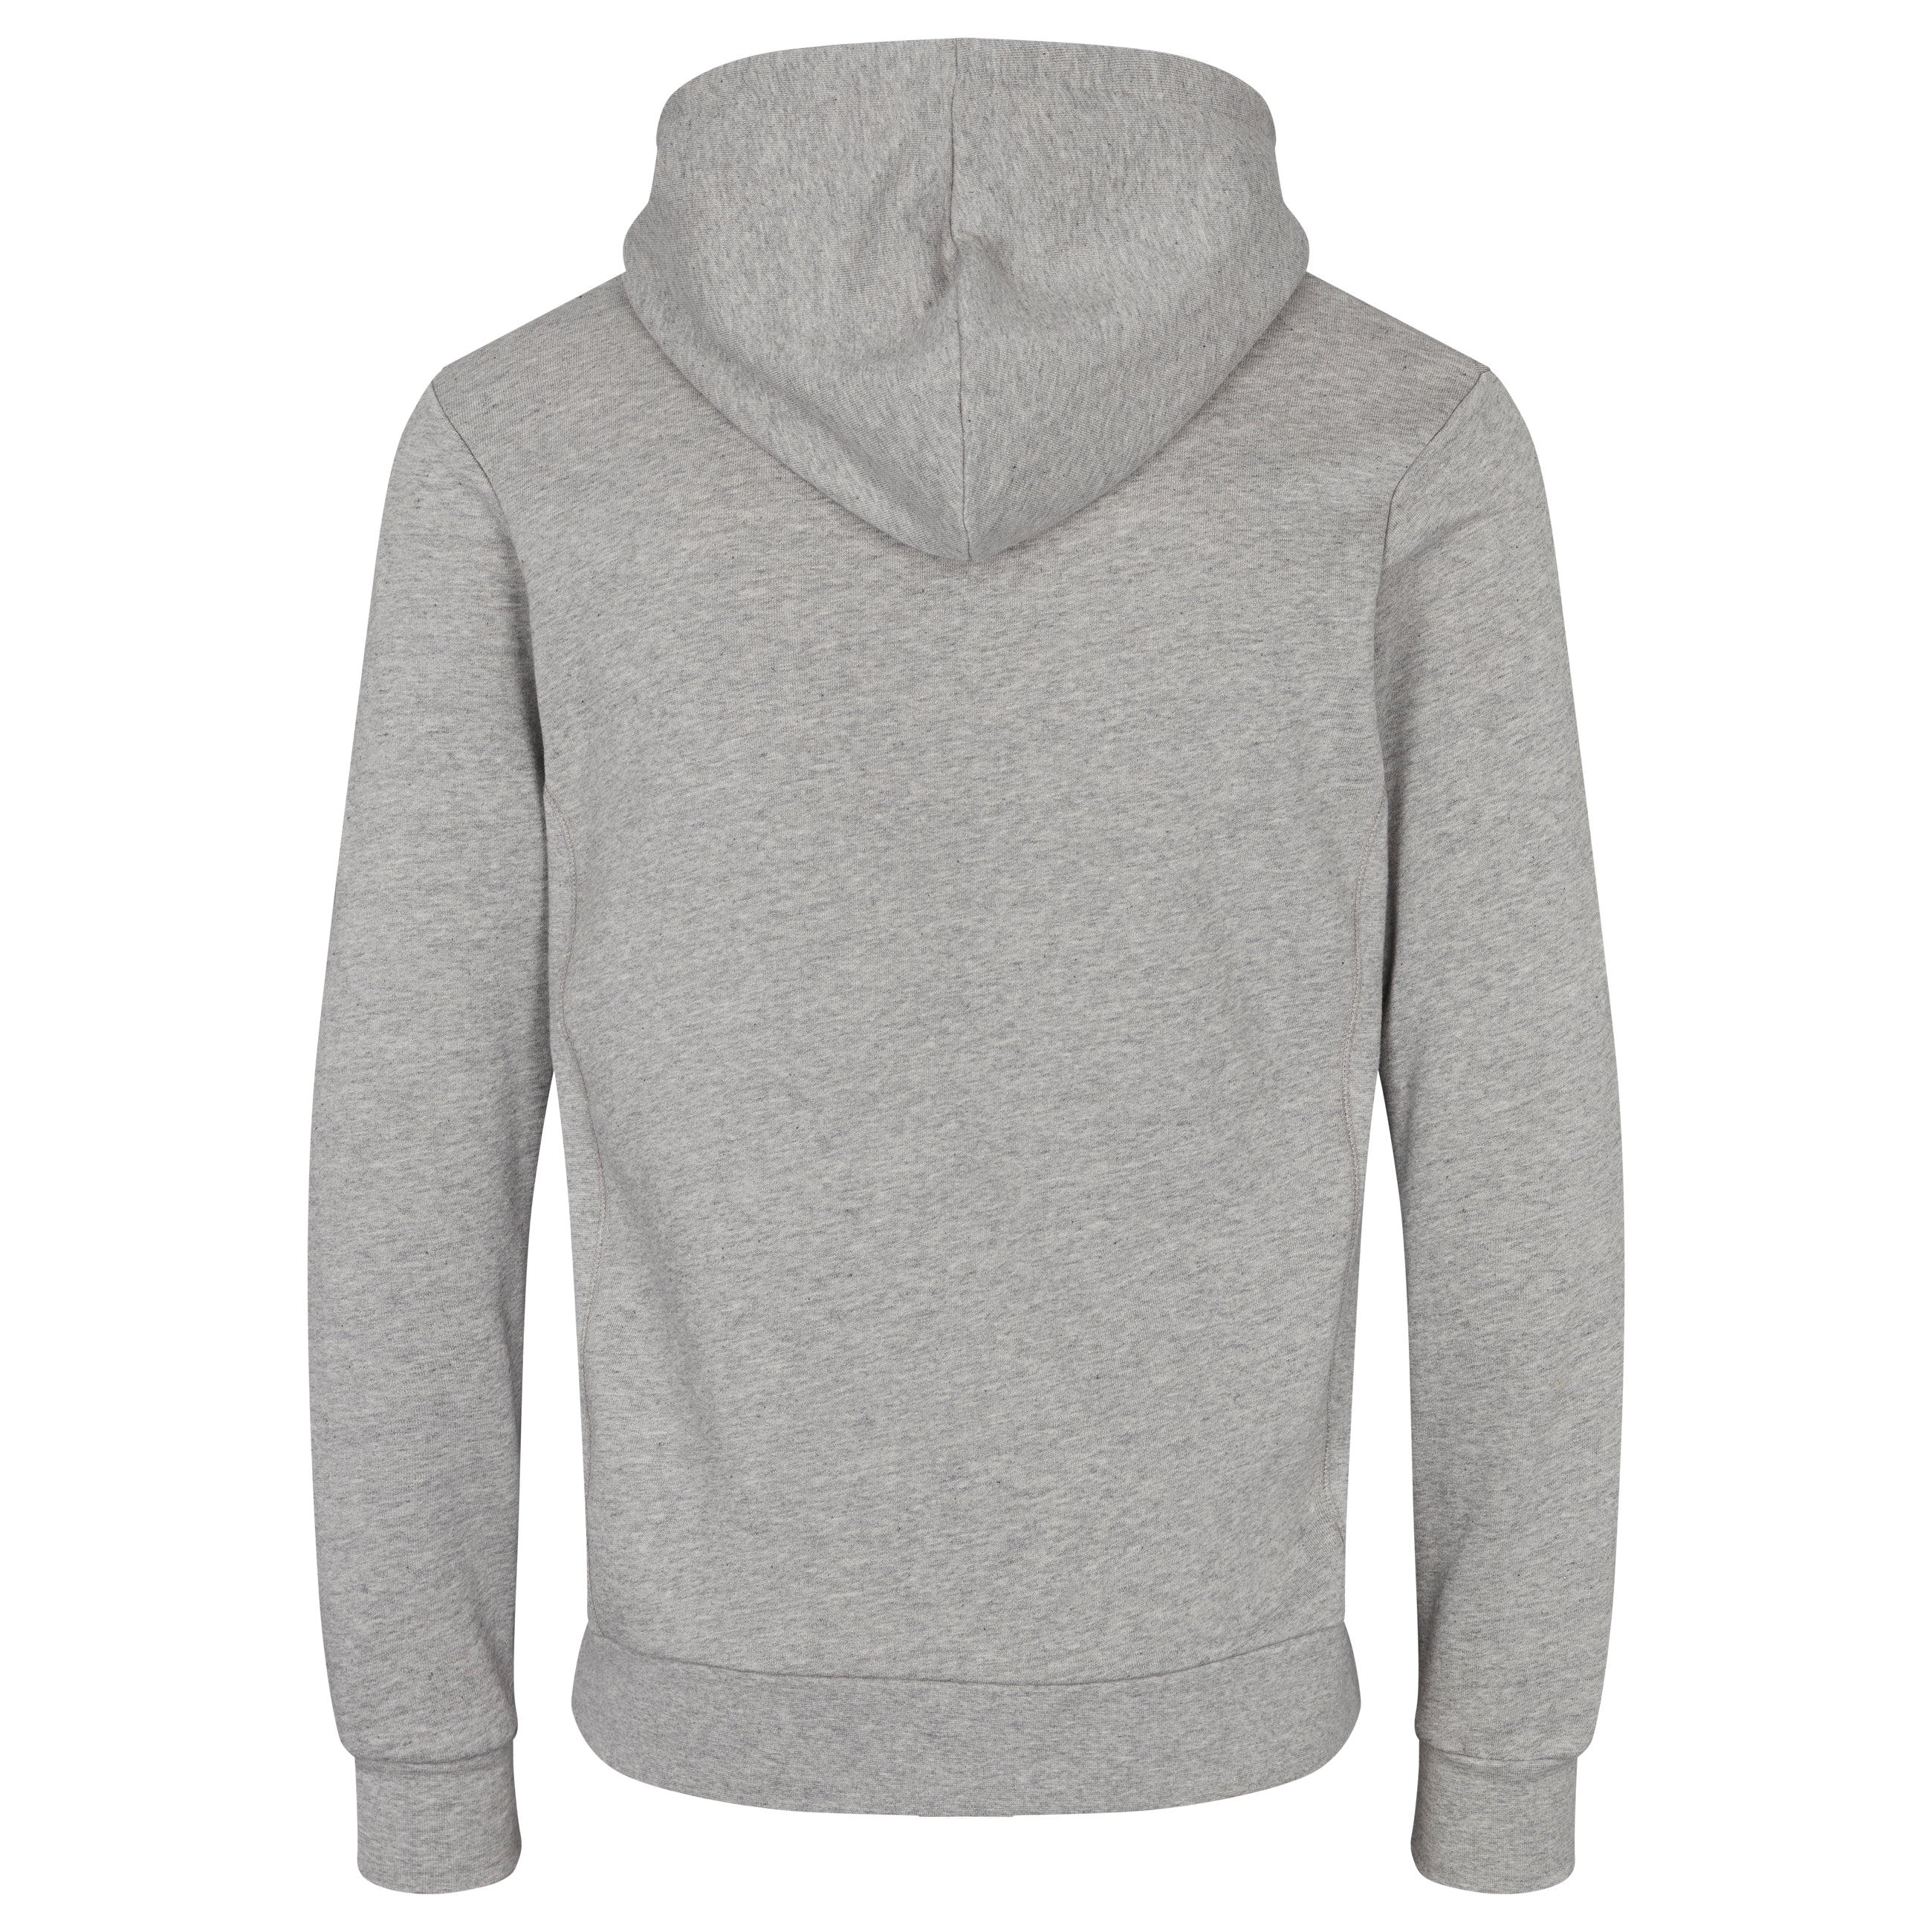 By Garment Makers Jones The Organic Hoodie GOTS Sweatshirt 1145 Light Grey Melange